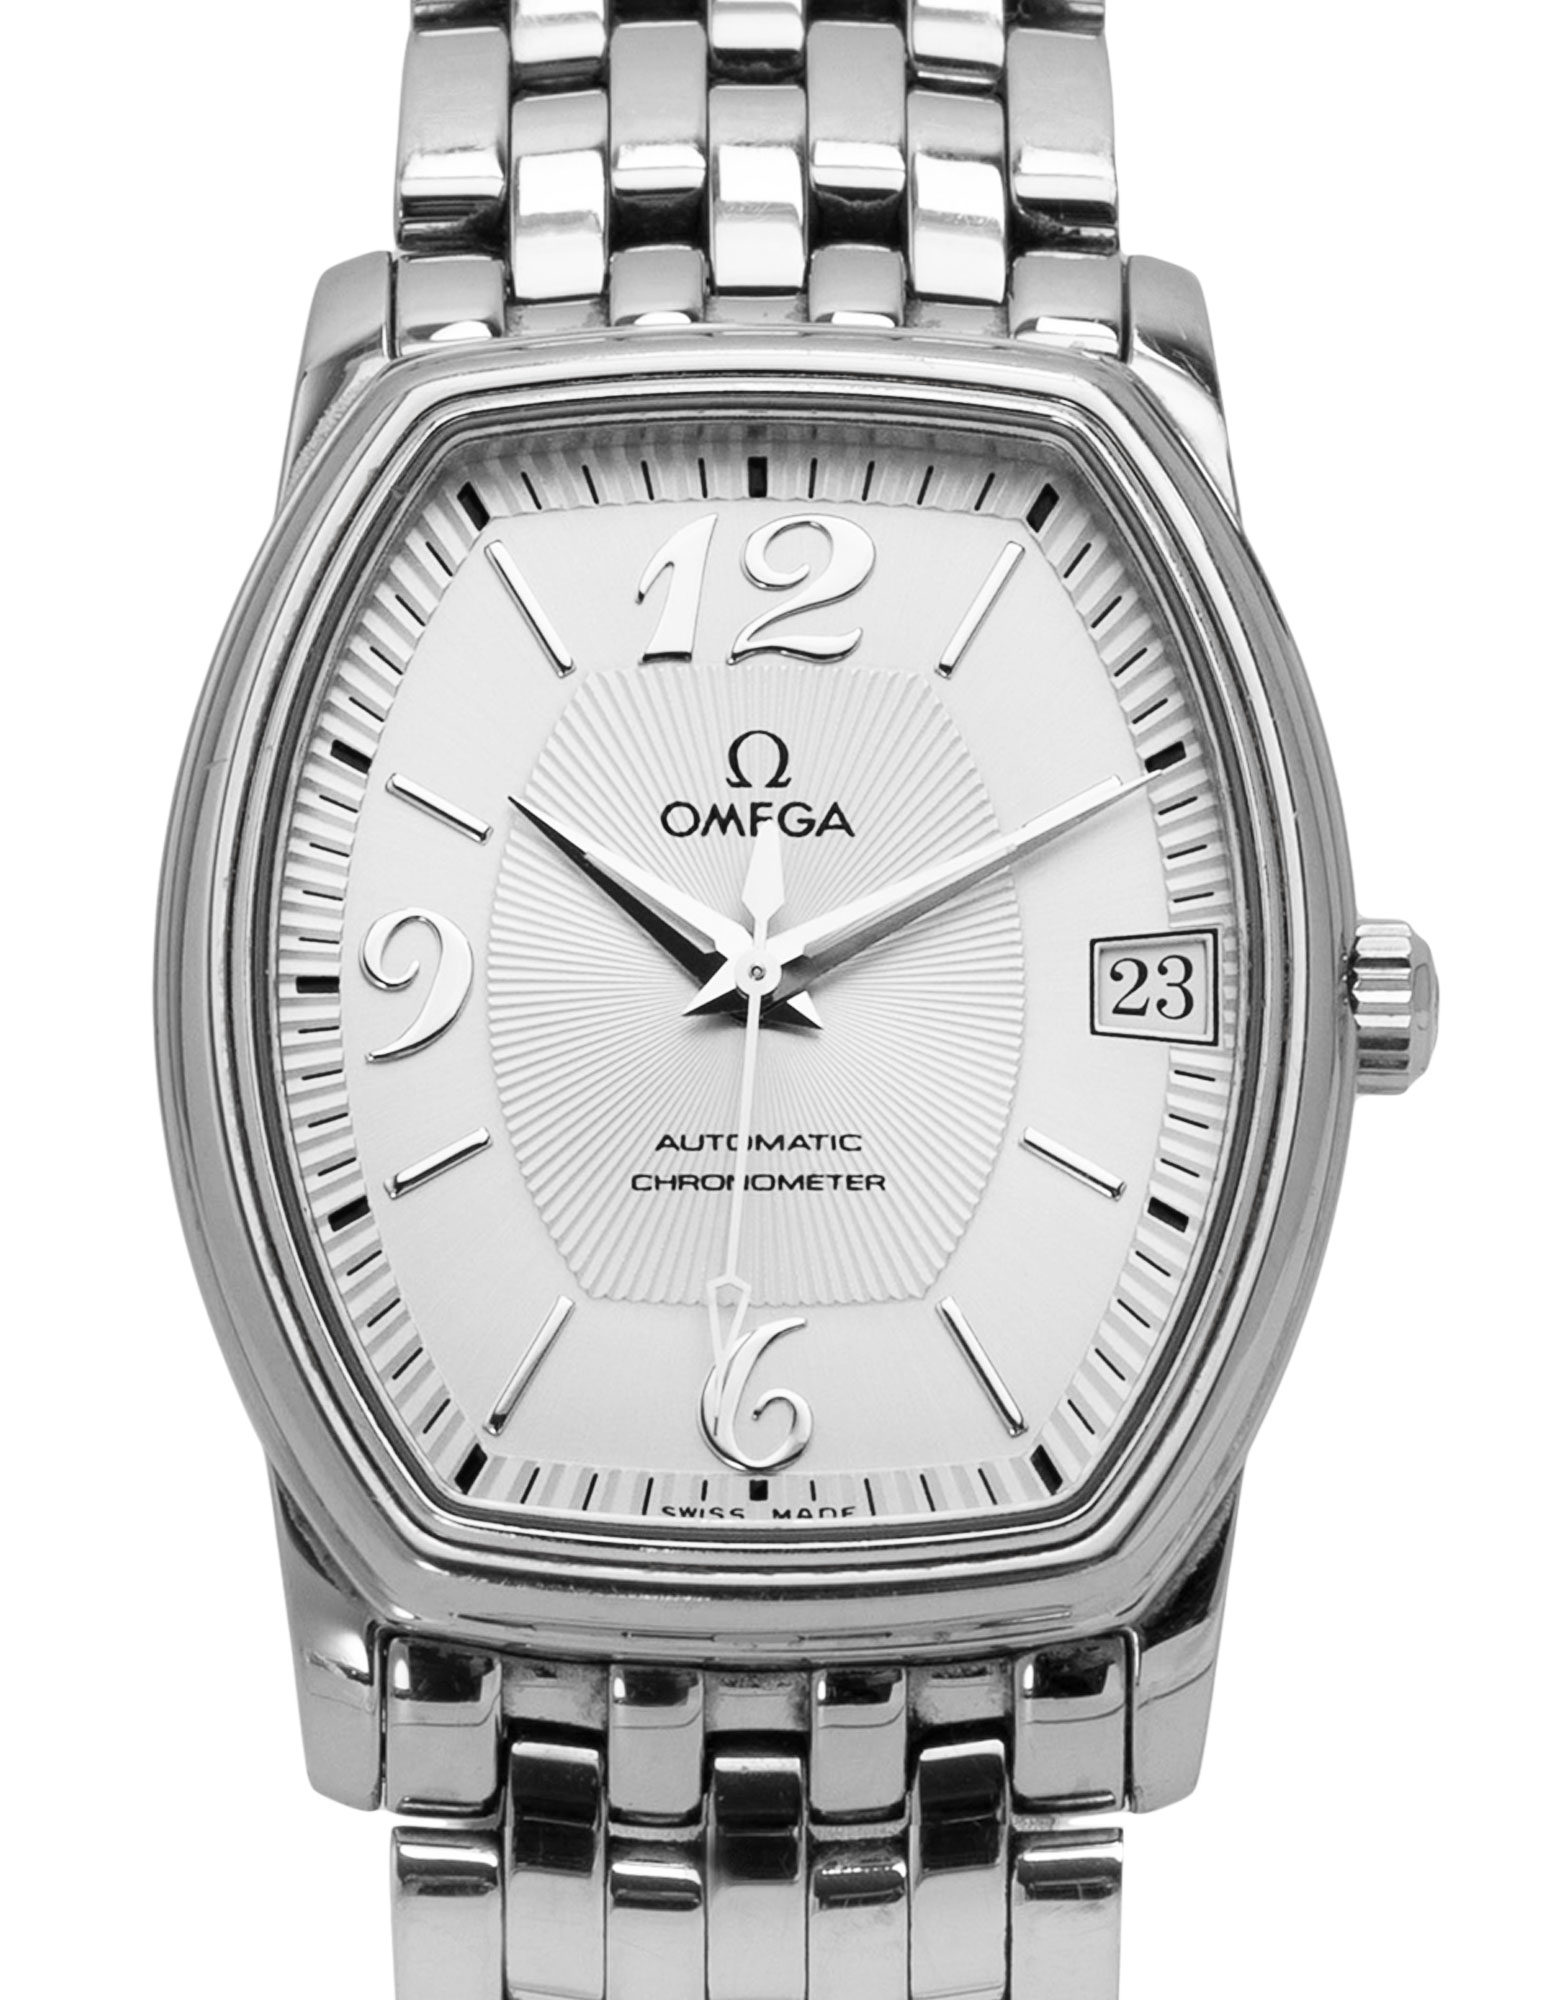 Buy Chairos Chrono+ Blue Analog Swiss Hand Made Watches for Men |  Switzerland Waterproof Luxury Watch | Stainless Steel Premium Wrist Watch  for Boys at Amazon.in